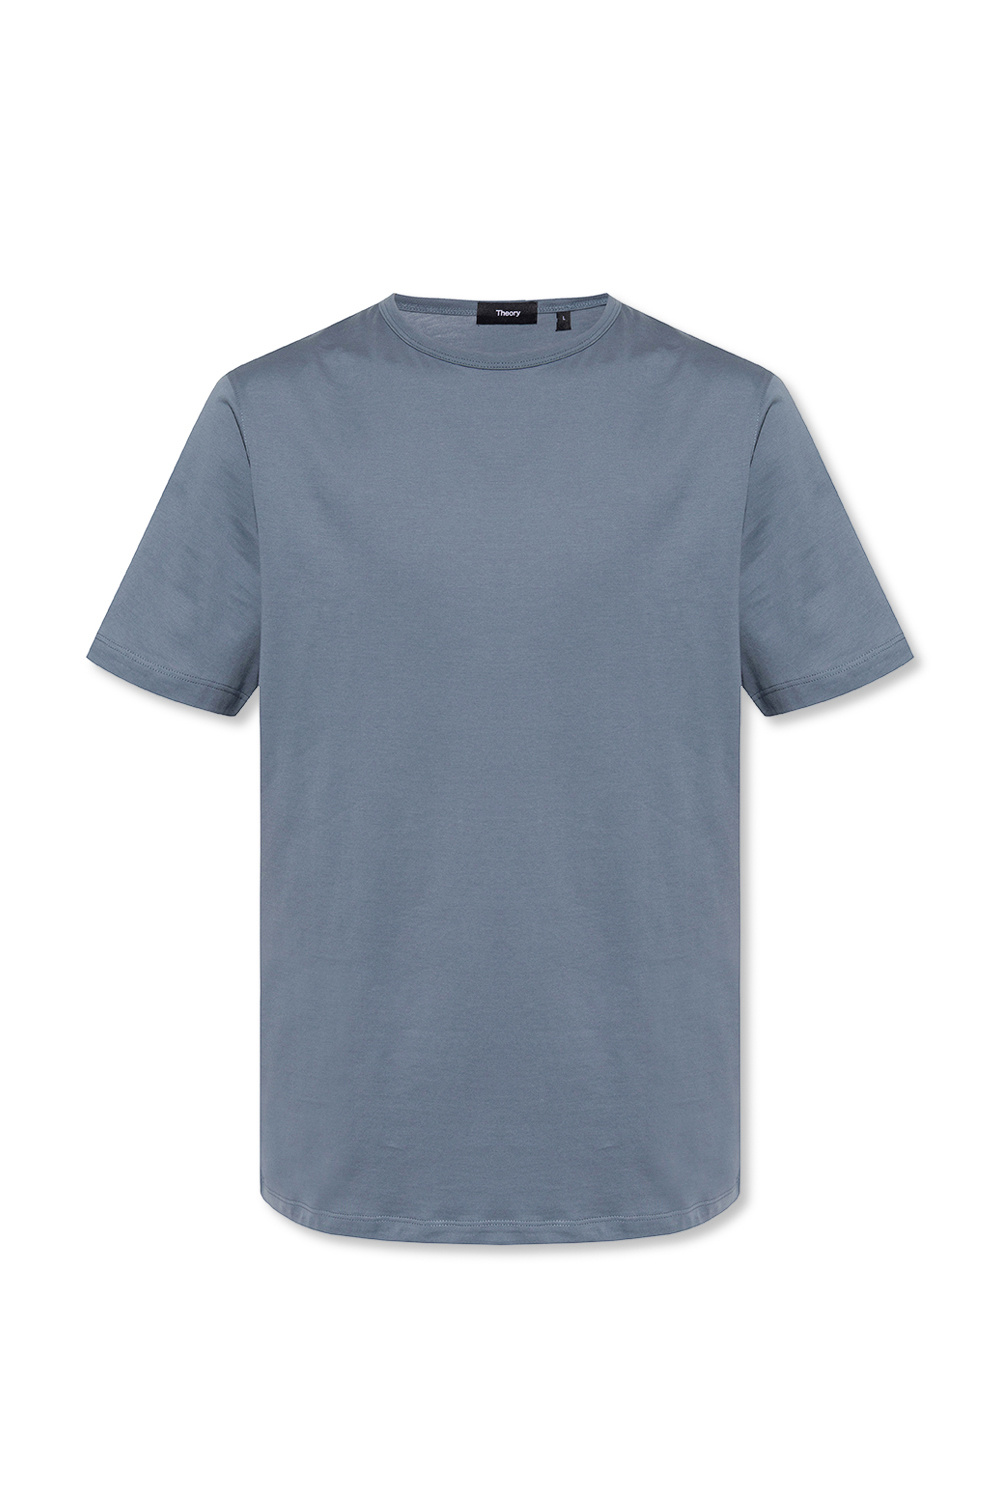 vauthier shirt - alexandre Iraq line shirt style - Grey item CamaragrancanariaShops Crewneck - Theory T long